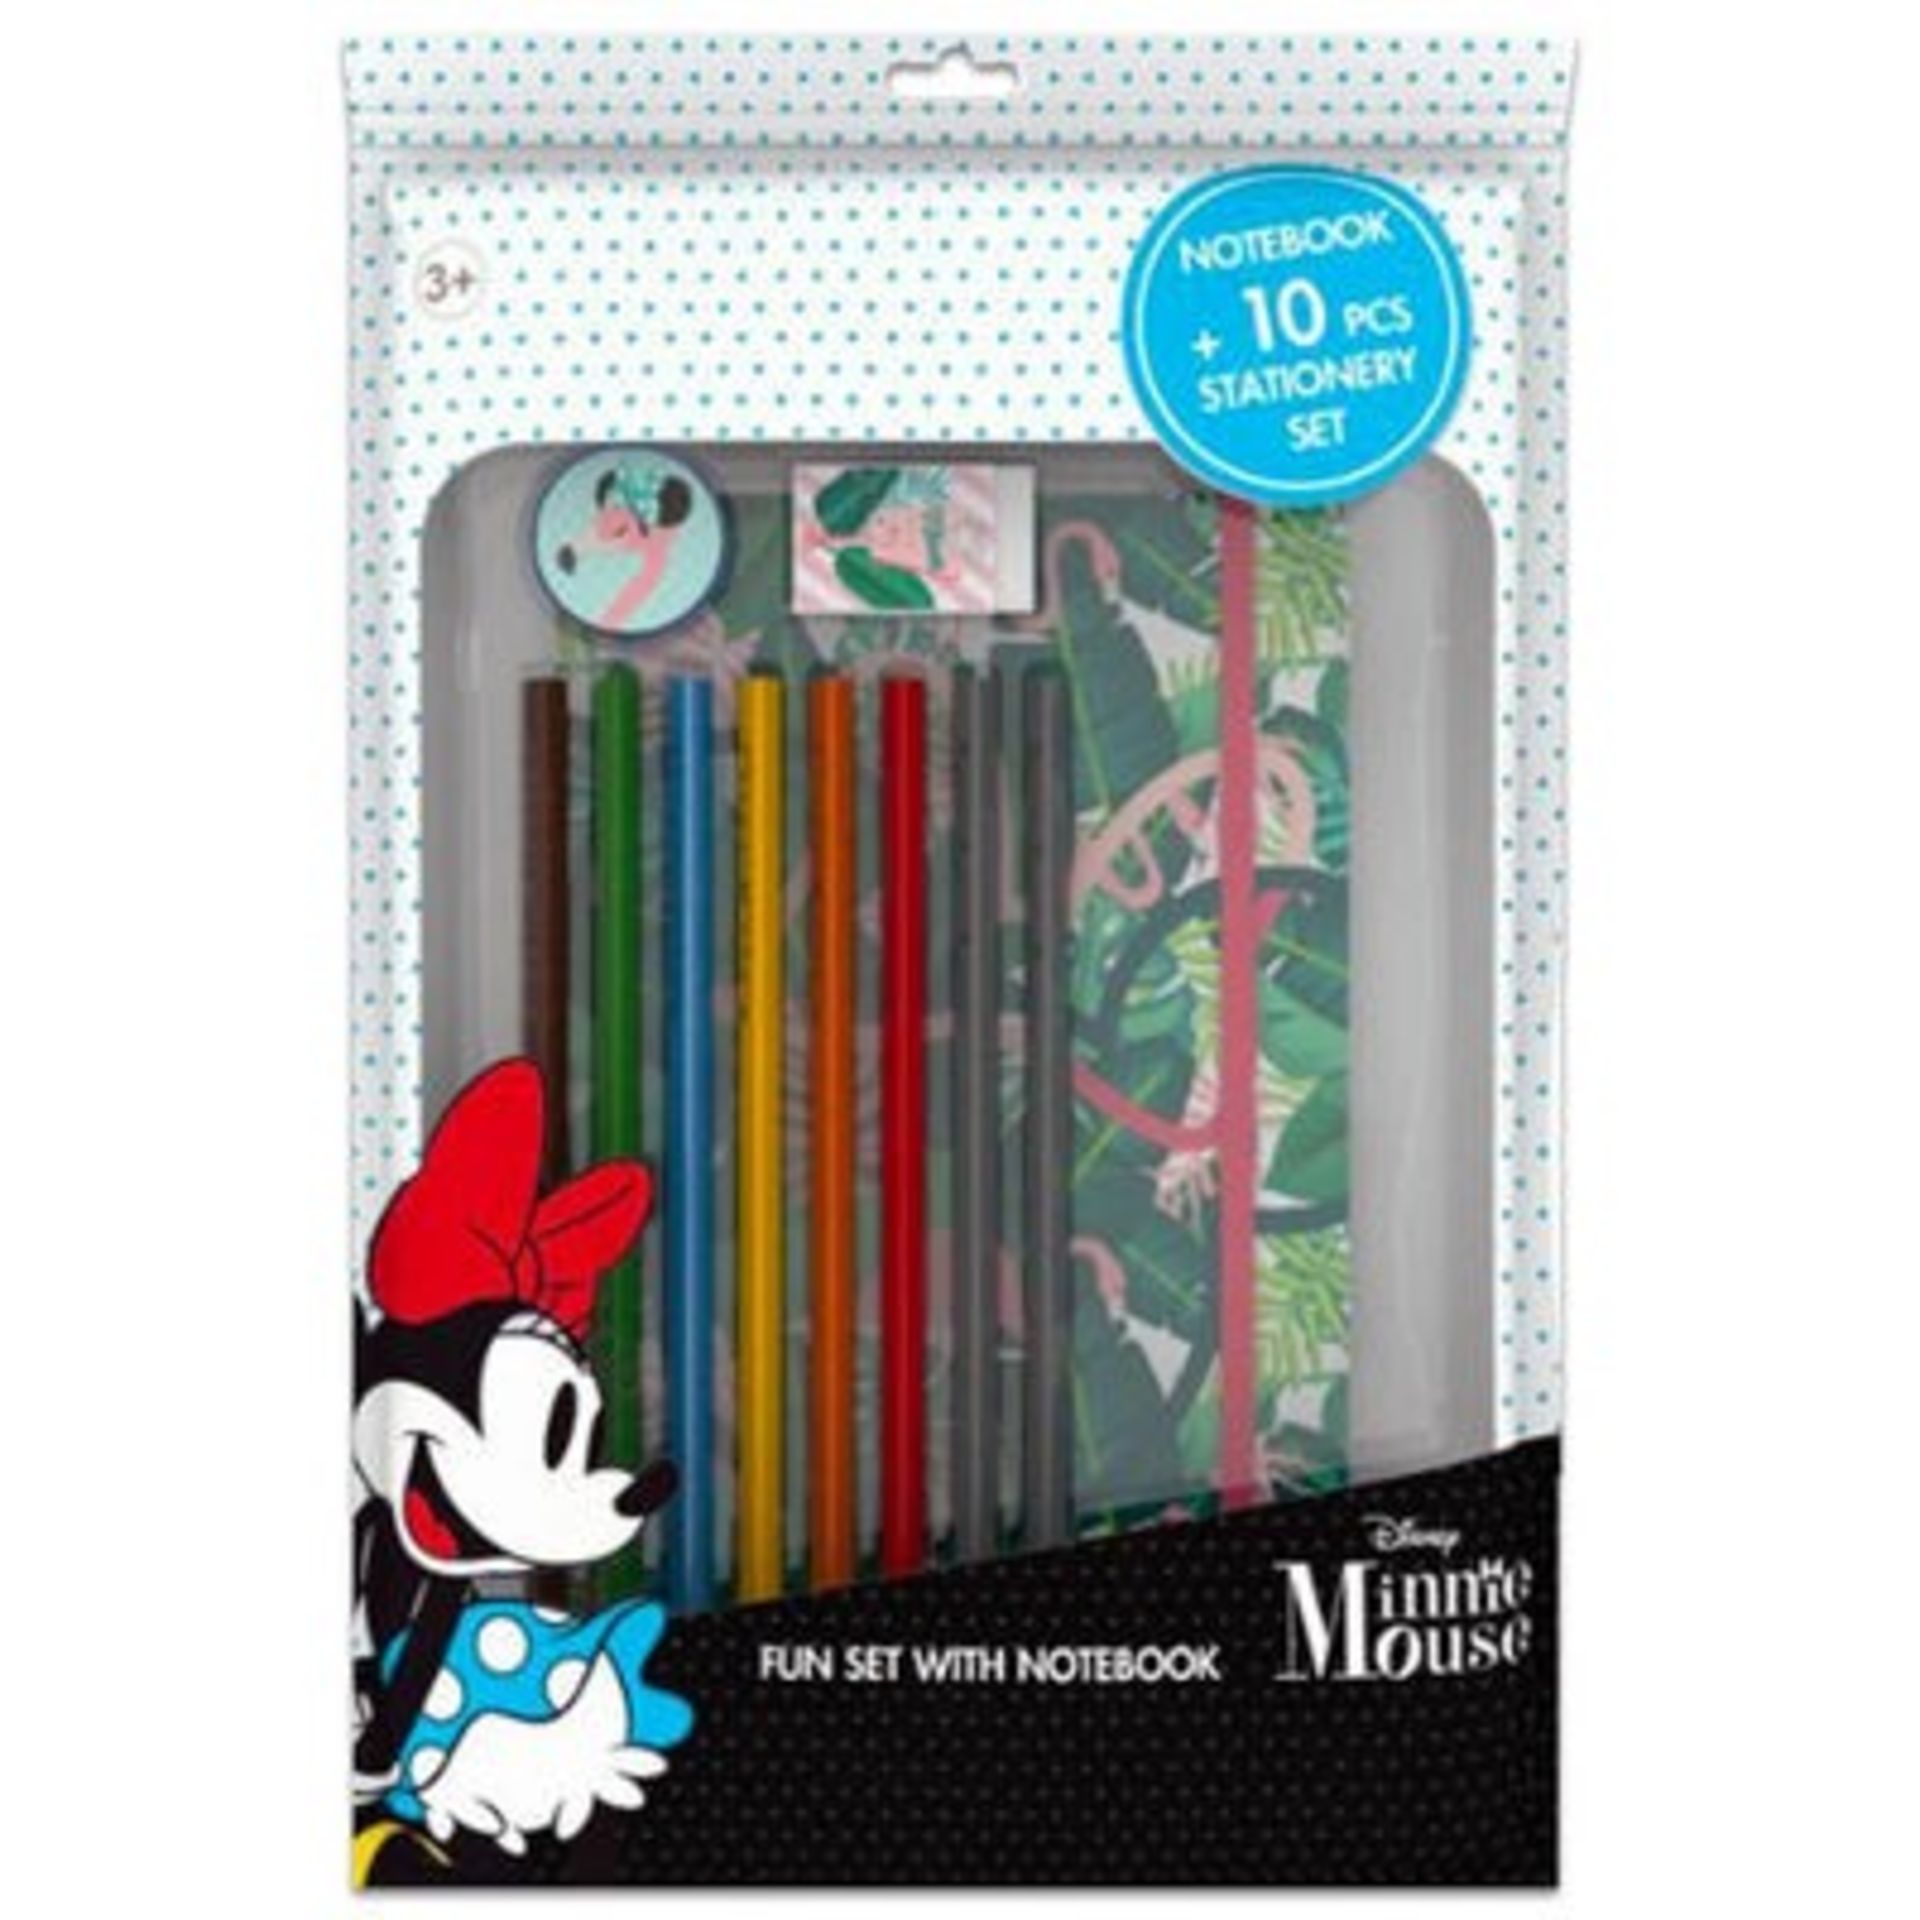 New Disney Minnie Mouse Notebook + 10pcs Stationery Set